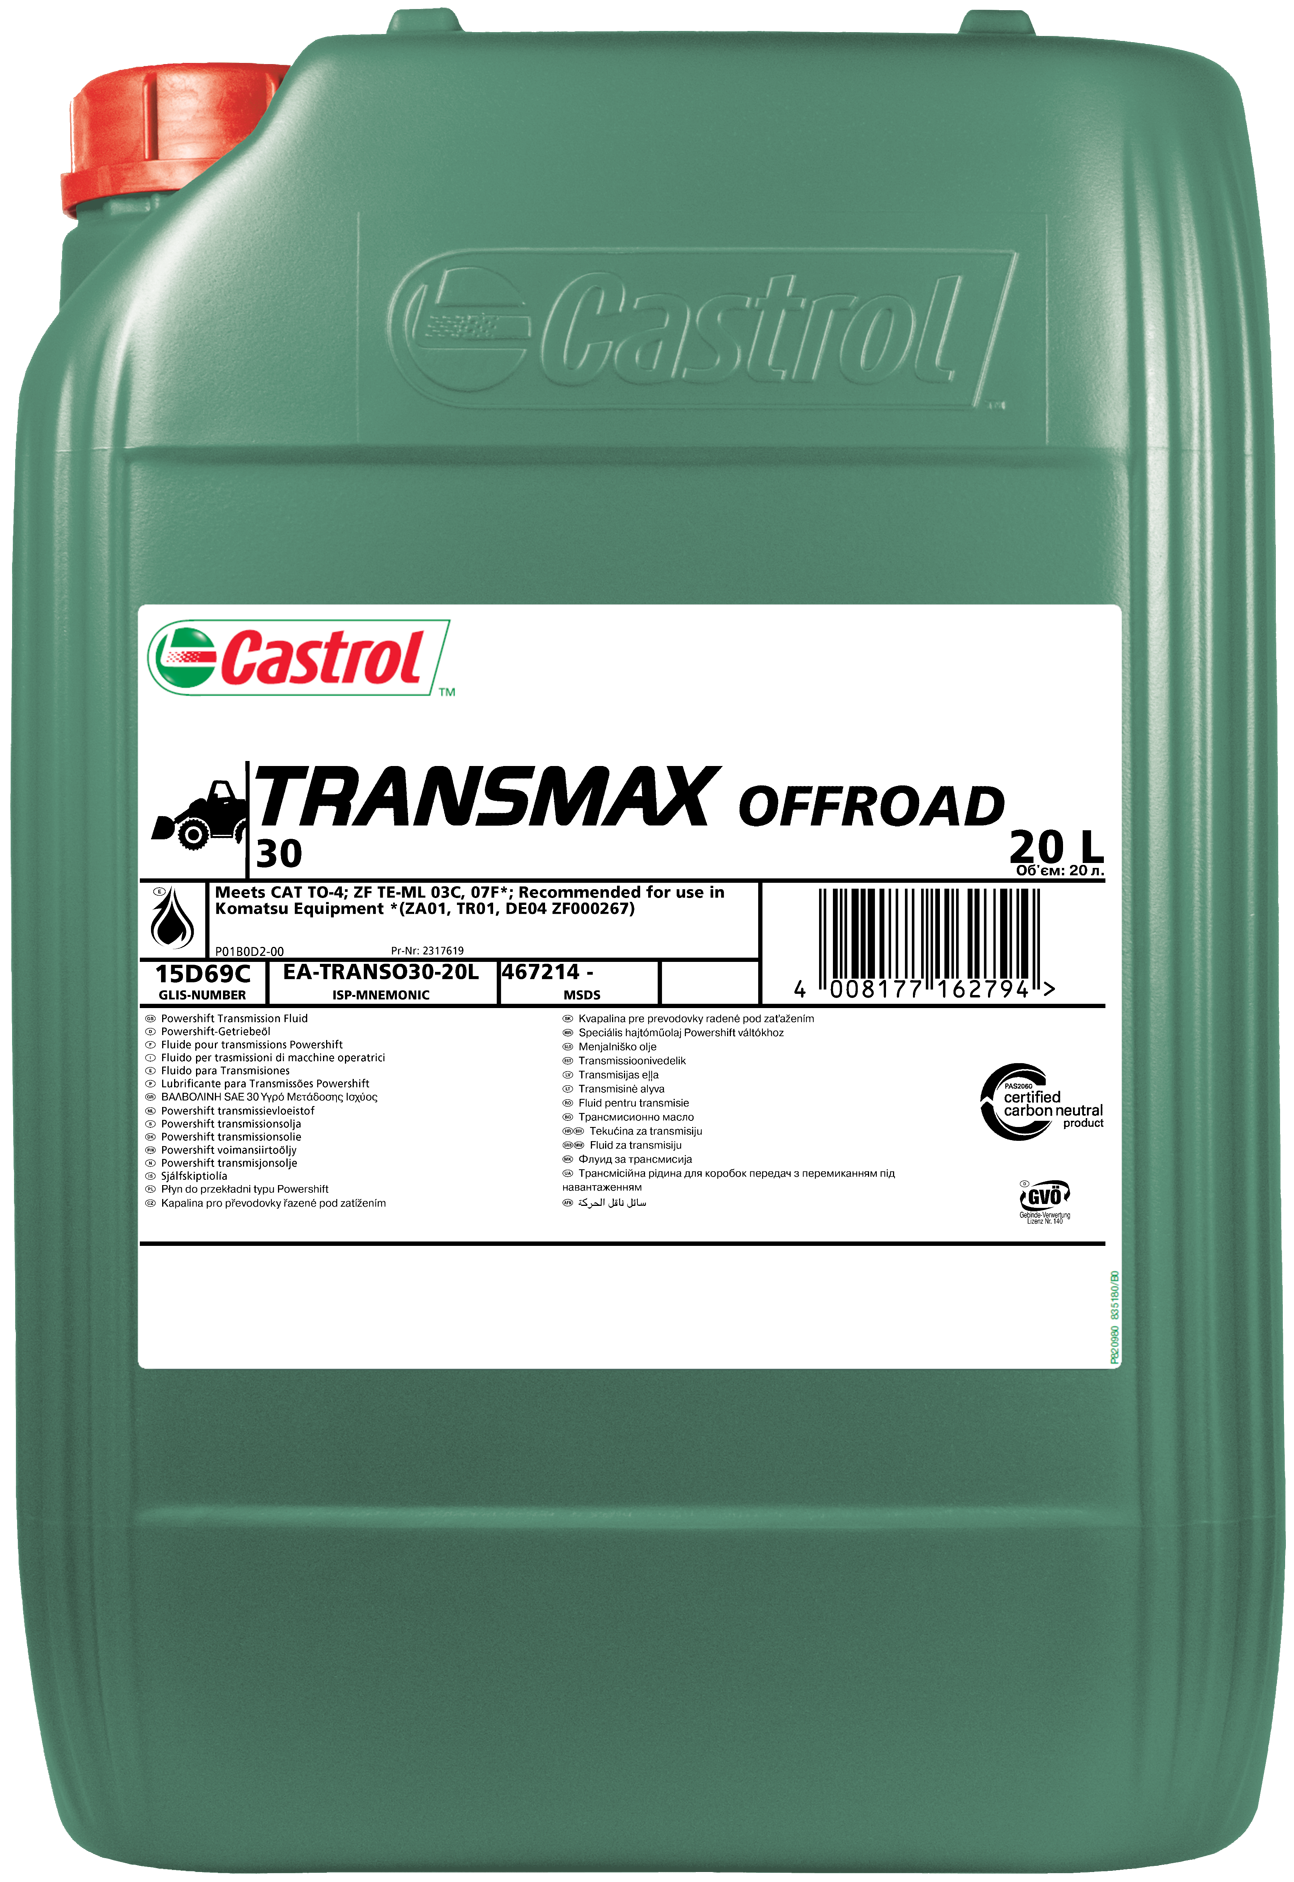 15D69C-20 Castrol Transmax Offroad 30 is een minerale transmissieolie van zeer goede kwaliteit.